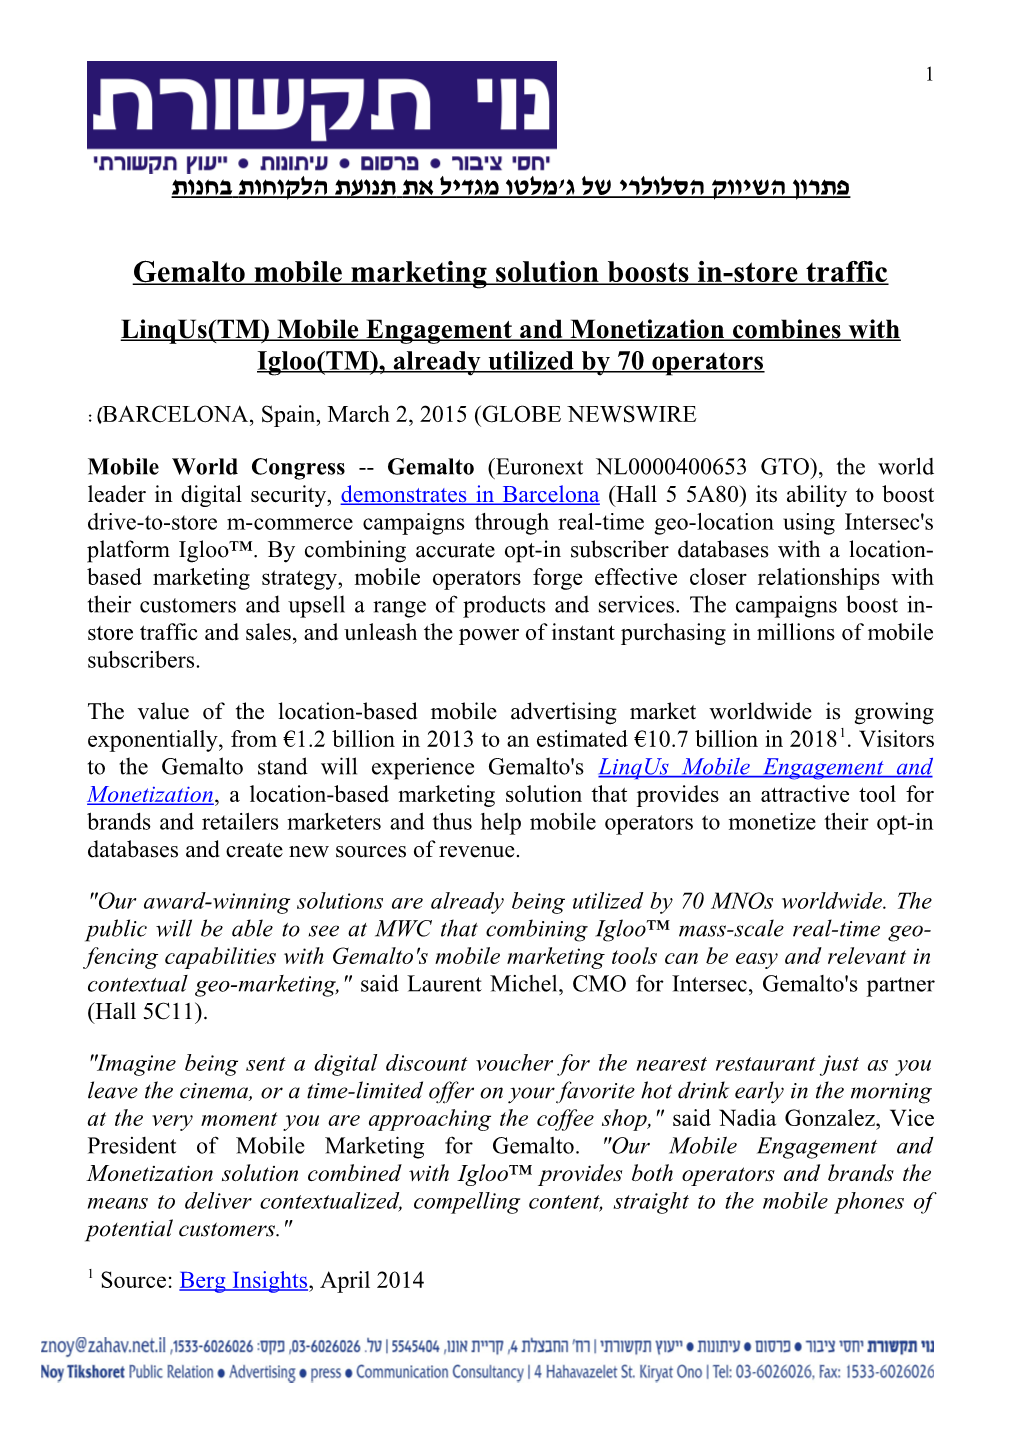 Gemalto Mobile Marketing Solution Boosts In-Store Traffic